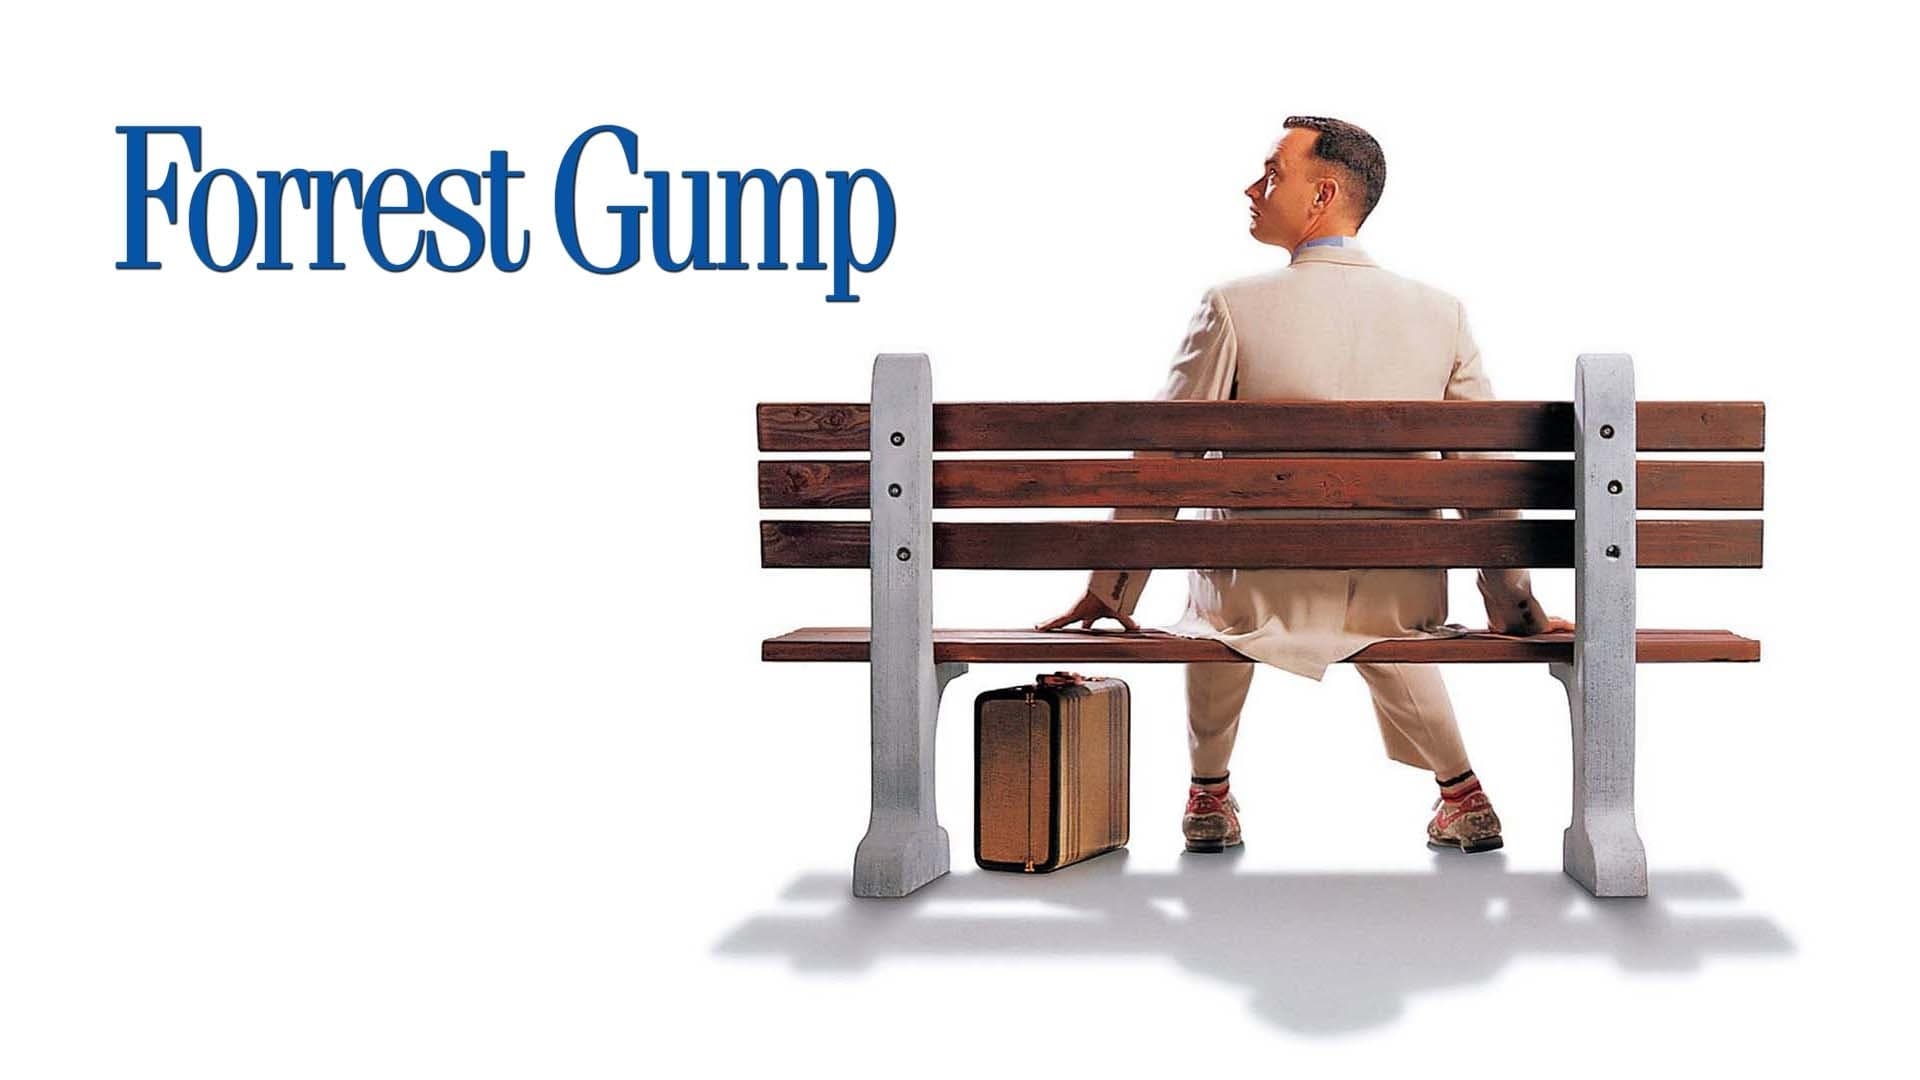 Watch Forrest Gump (1994) Full Movie Online Free | Stream Free Movies & TV Shows